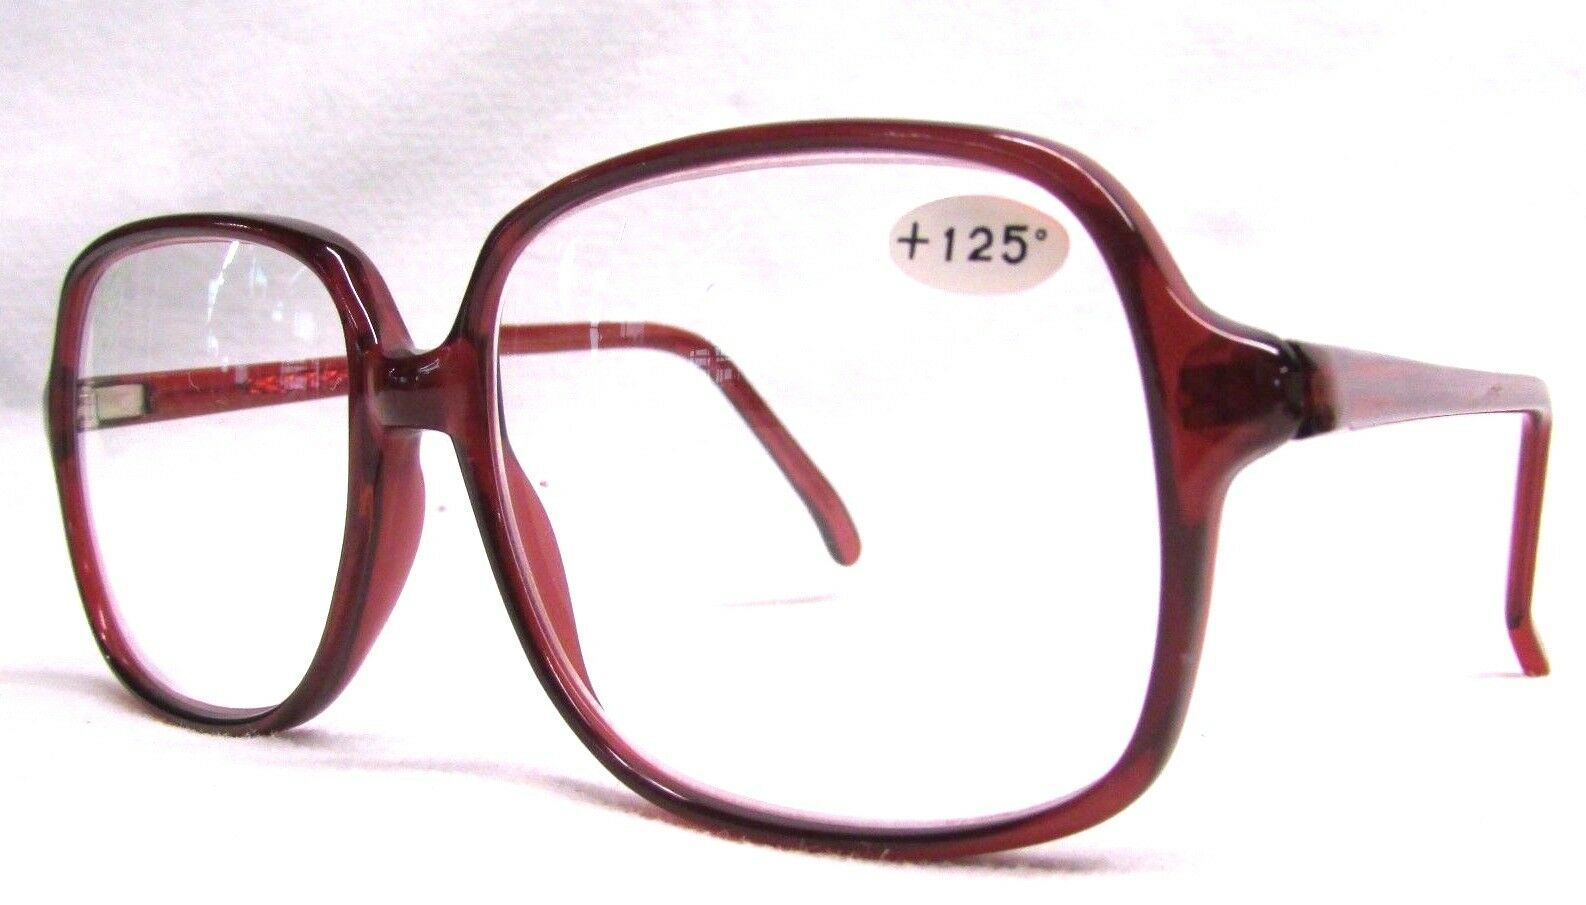 Bifocal Reader Reading Glasses Clear Oversize Lens Assorted Frames Lot Of 12 Reading Glasses